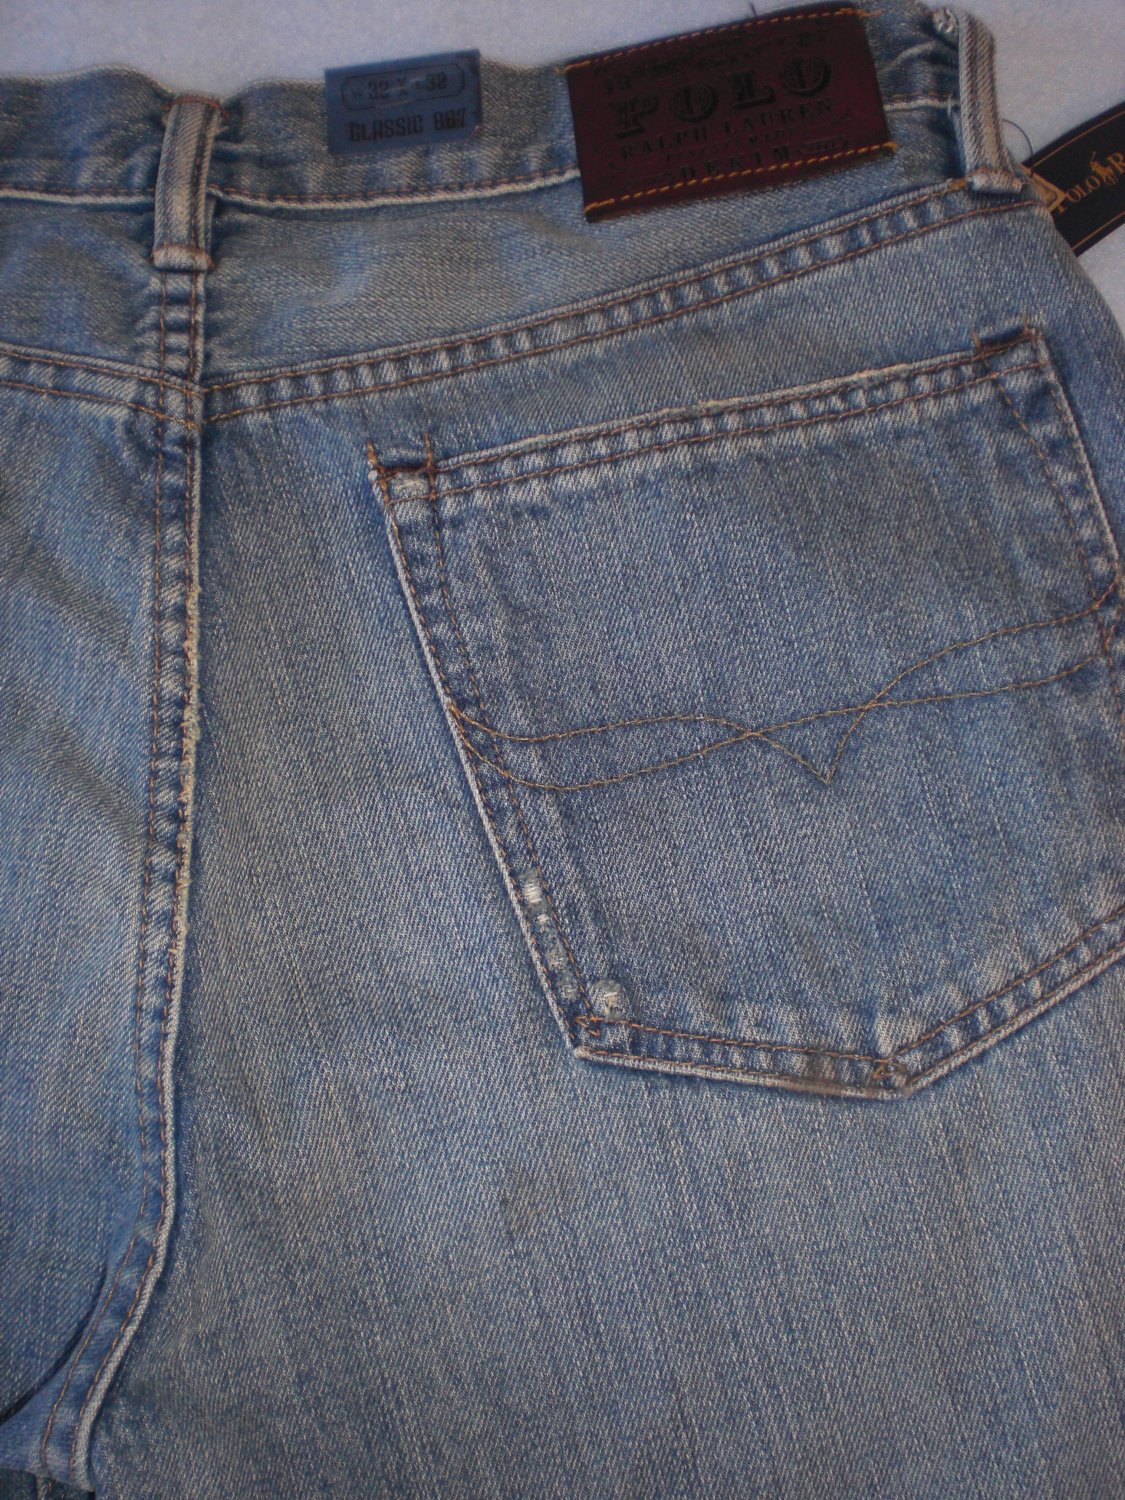 Polo Ralph Lauren Classic 867 Distressed jeans Paint Size 32x32 MSRP $98